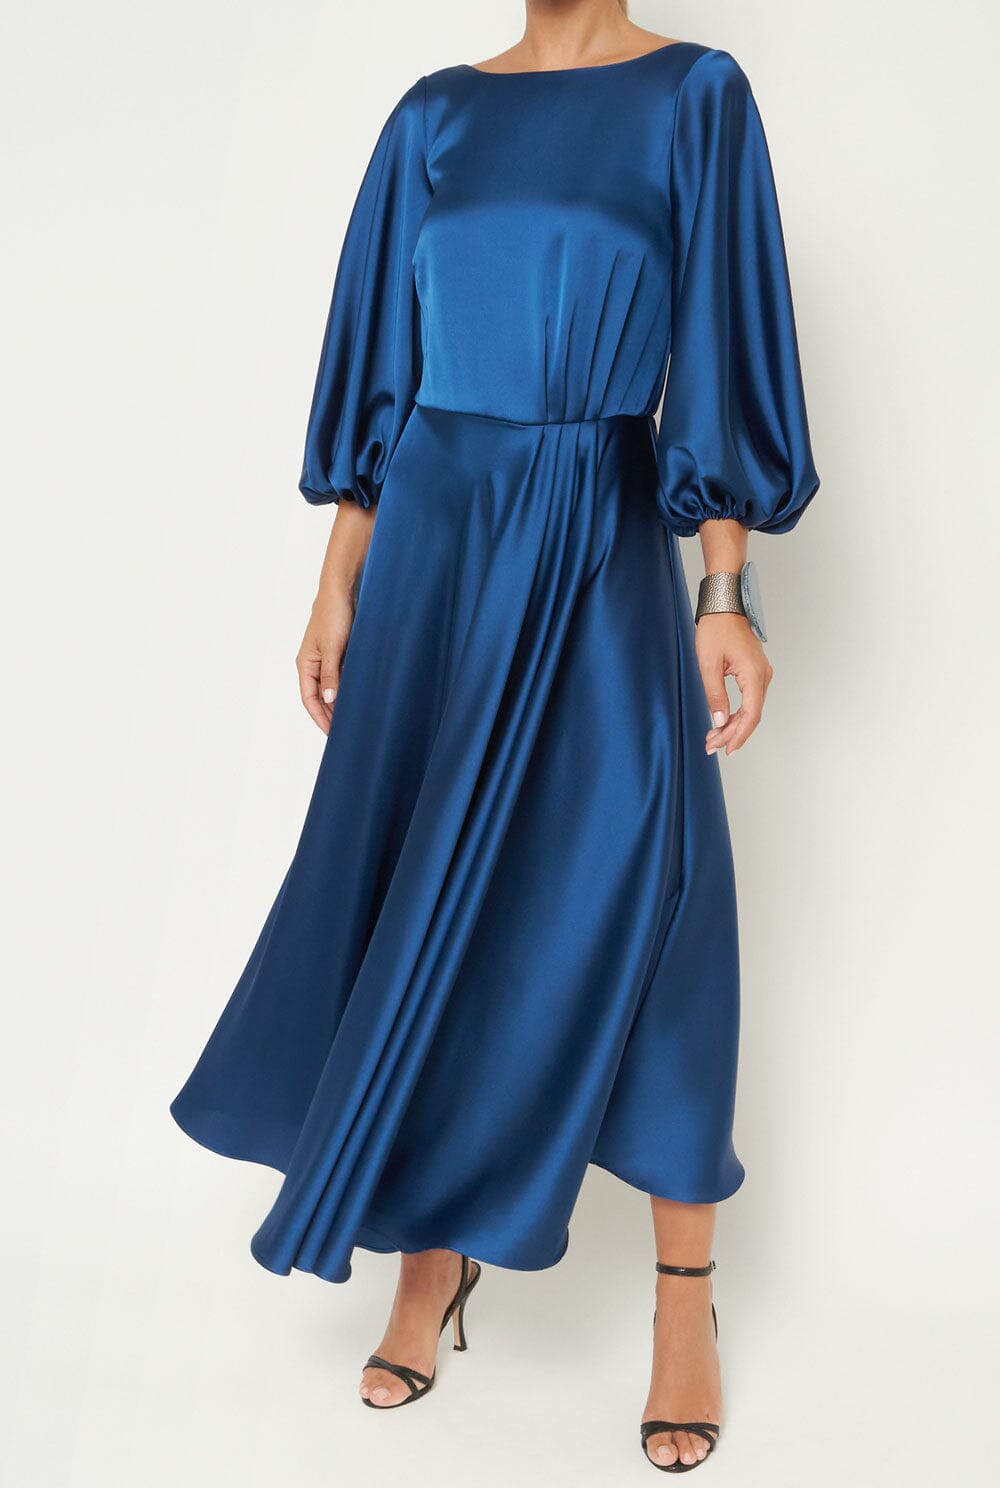 Vestido Tilda Azulon Dresses Duyos 